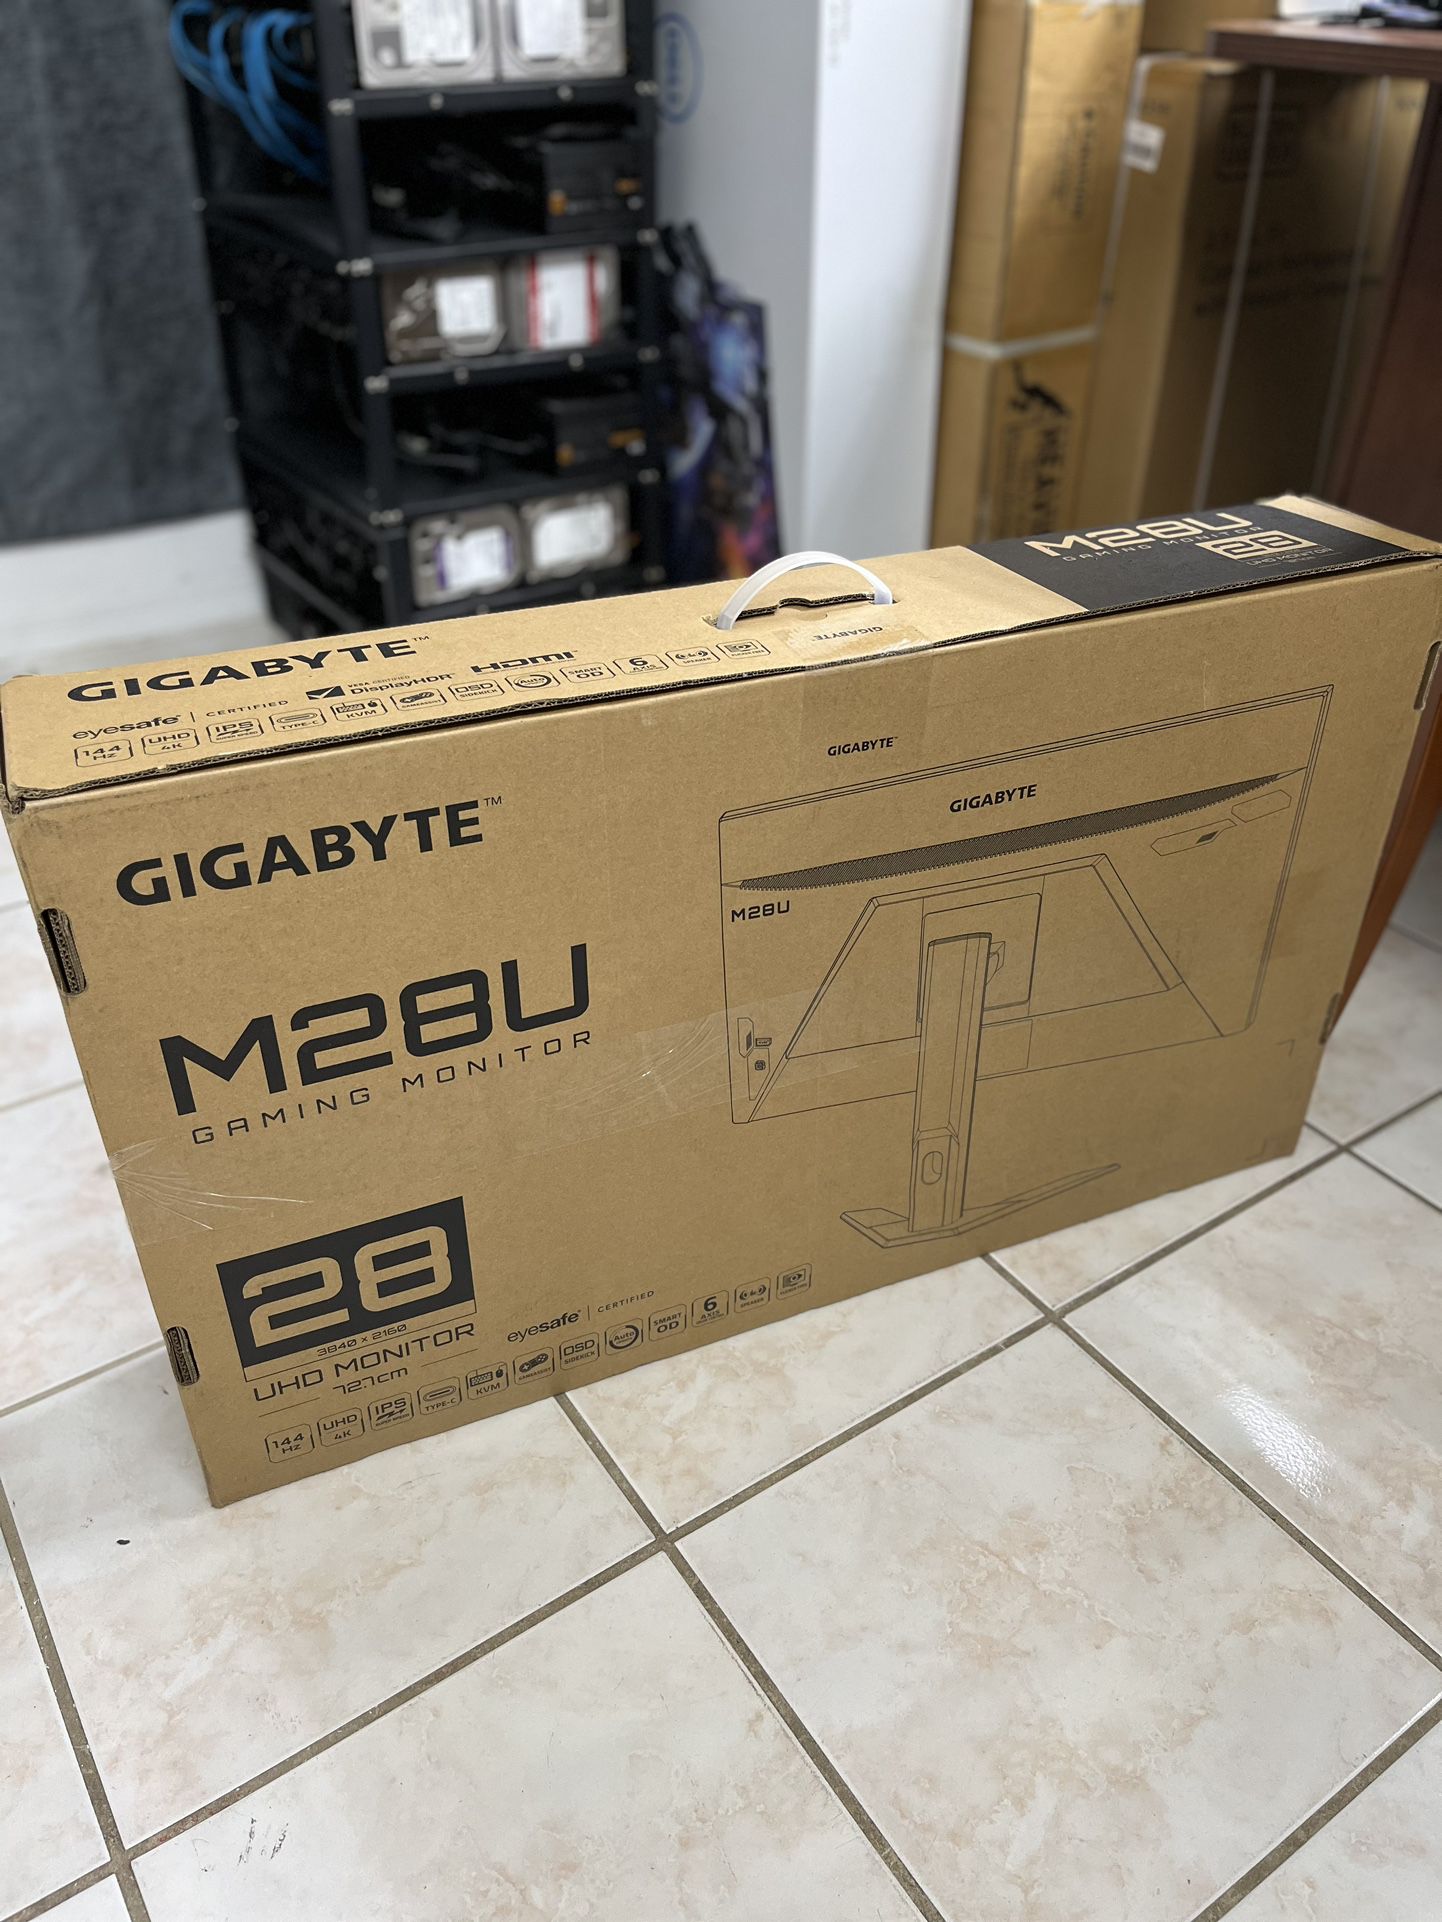 GIGABYTE™ M28U GAMING MONITOR